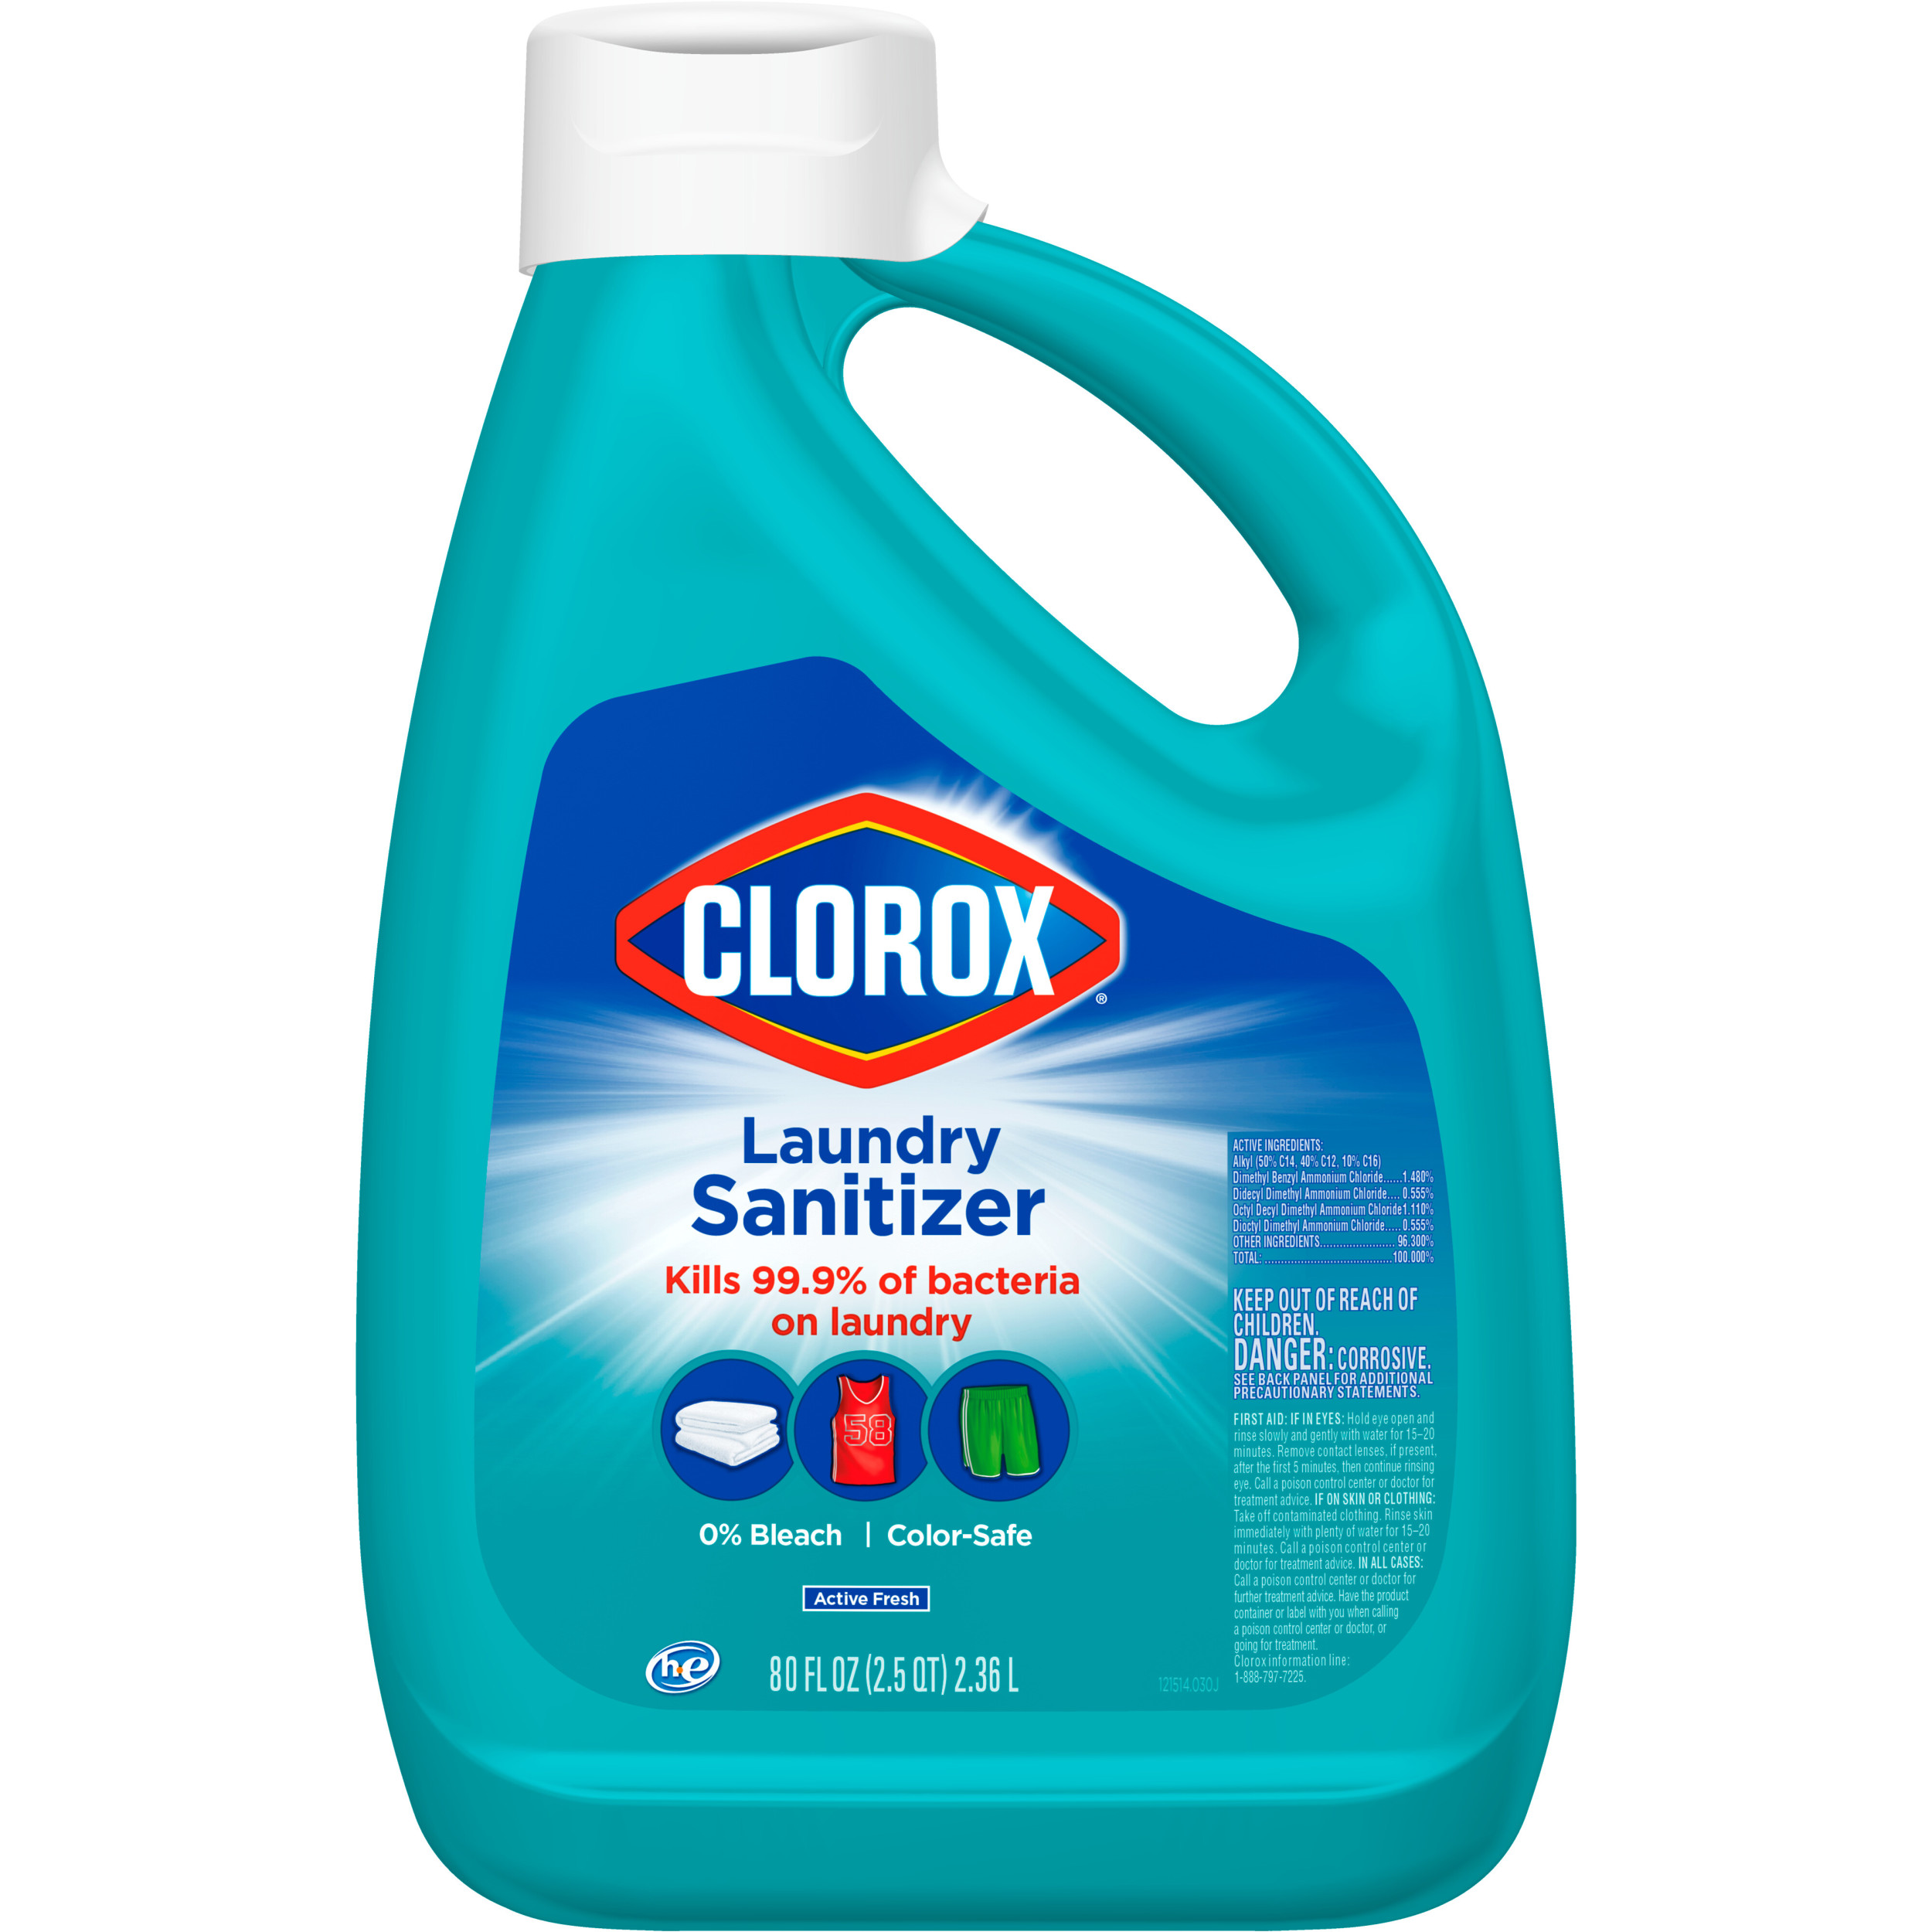 Clorox Laundry Sanitizer, Color Safe and Order Eliminating, 80 fl oz - image 3 of 10